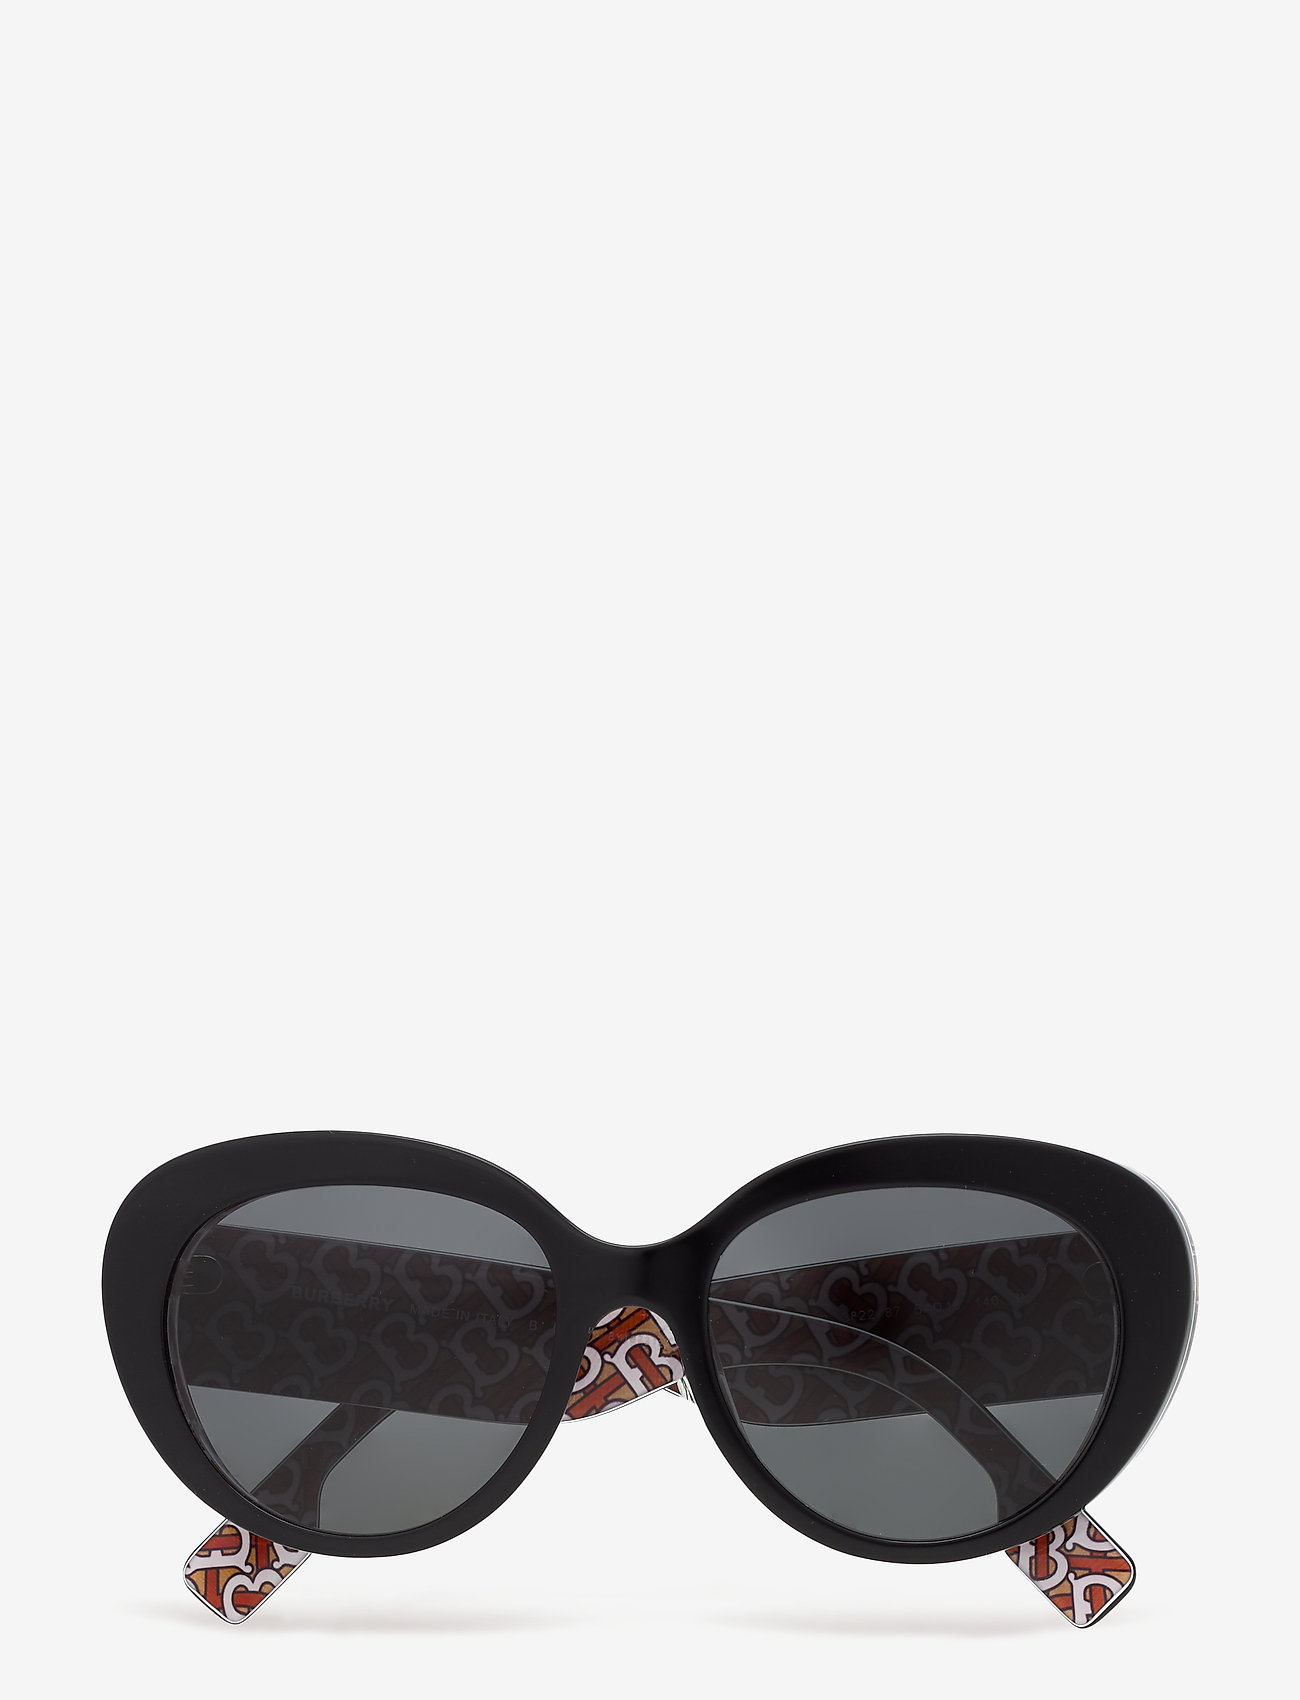 red burberry sunglasses